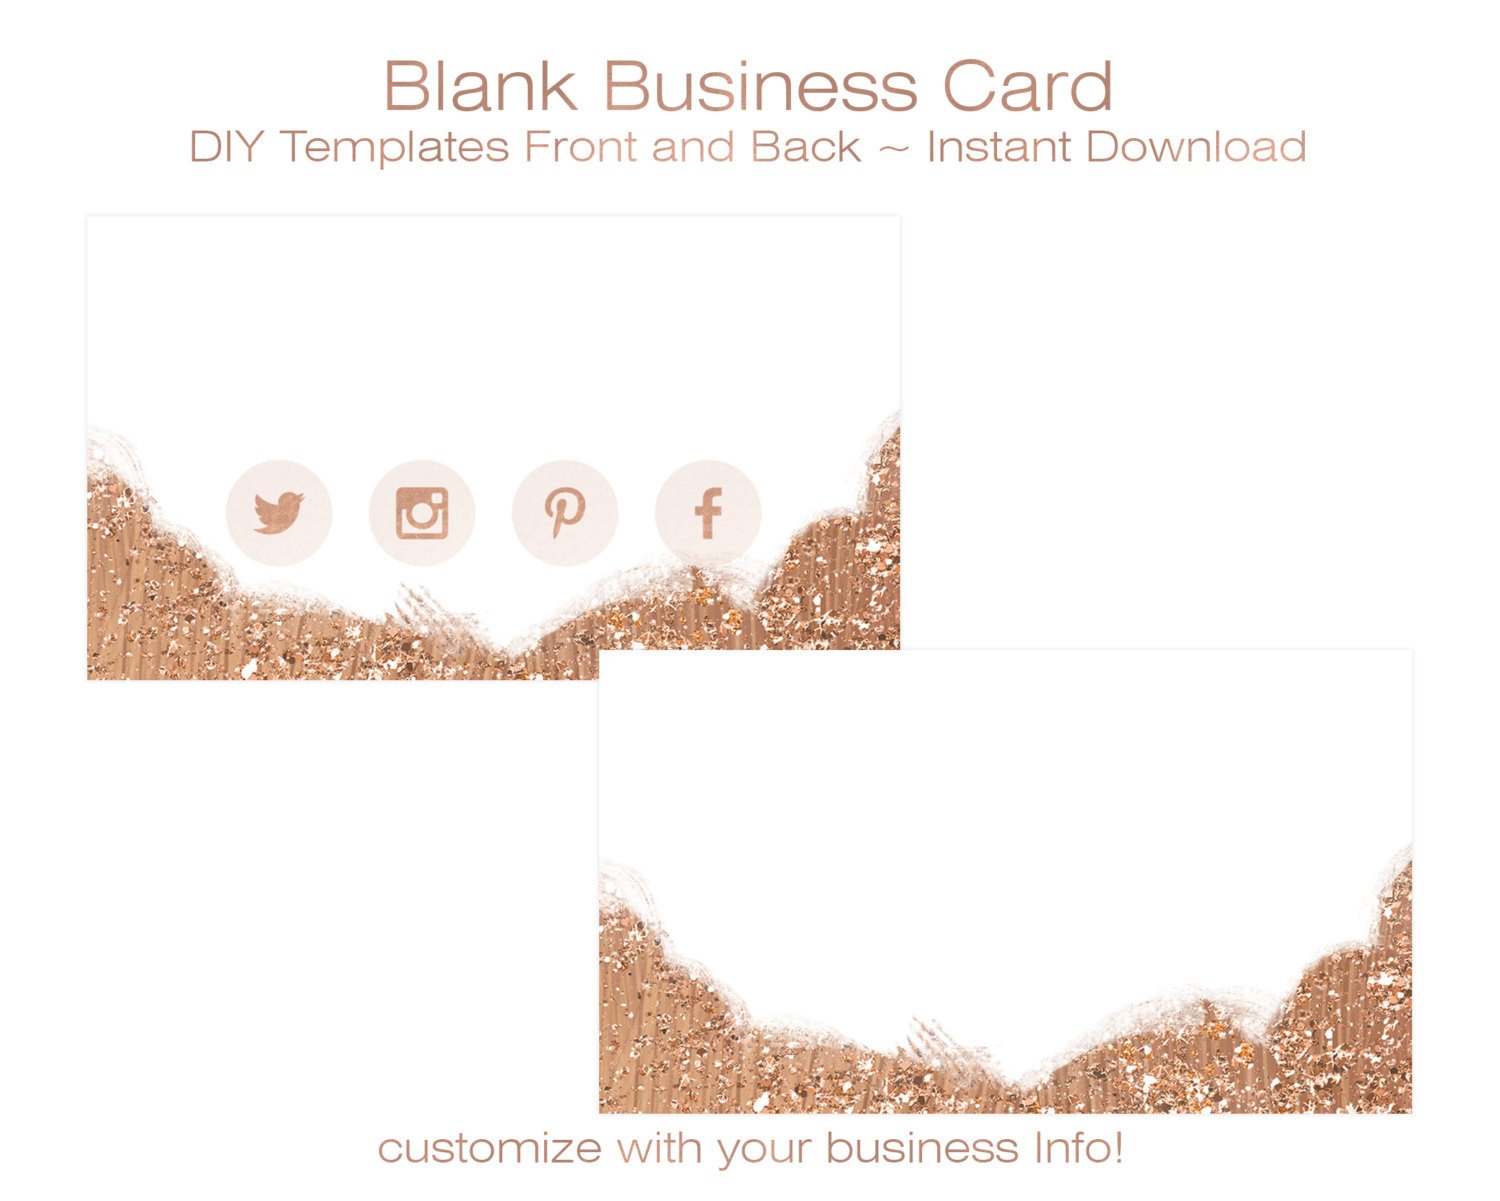 BUSINESS CARD Template DIY Blank Business Card Standard Size